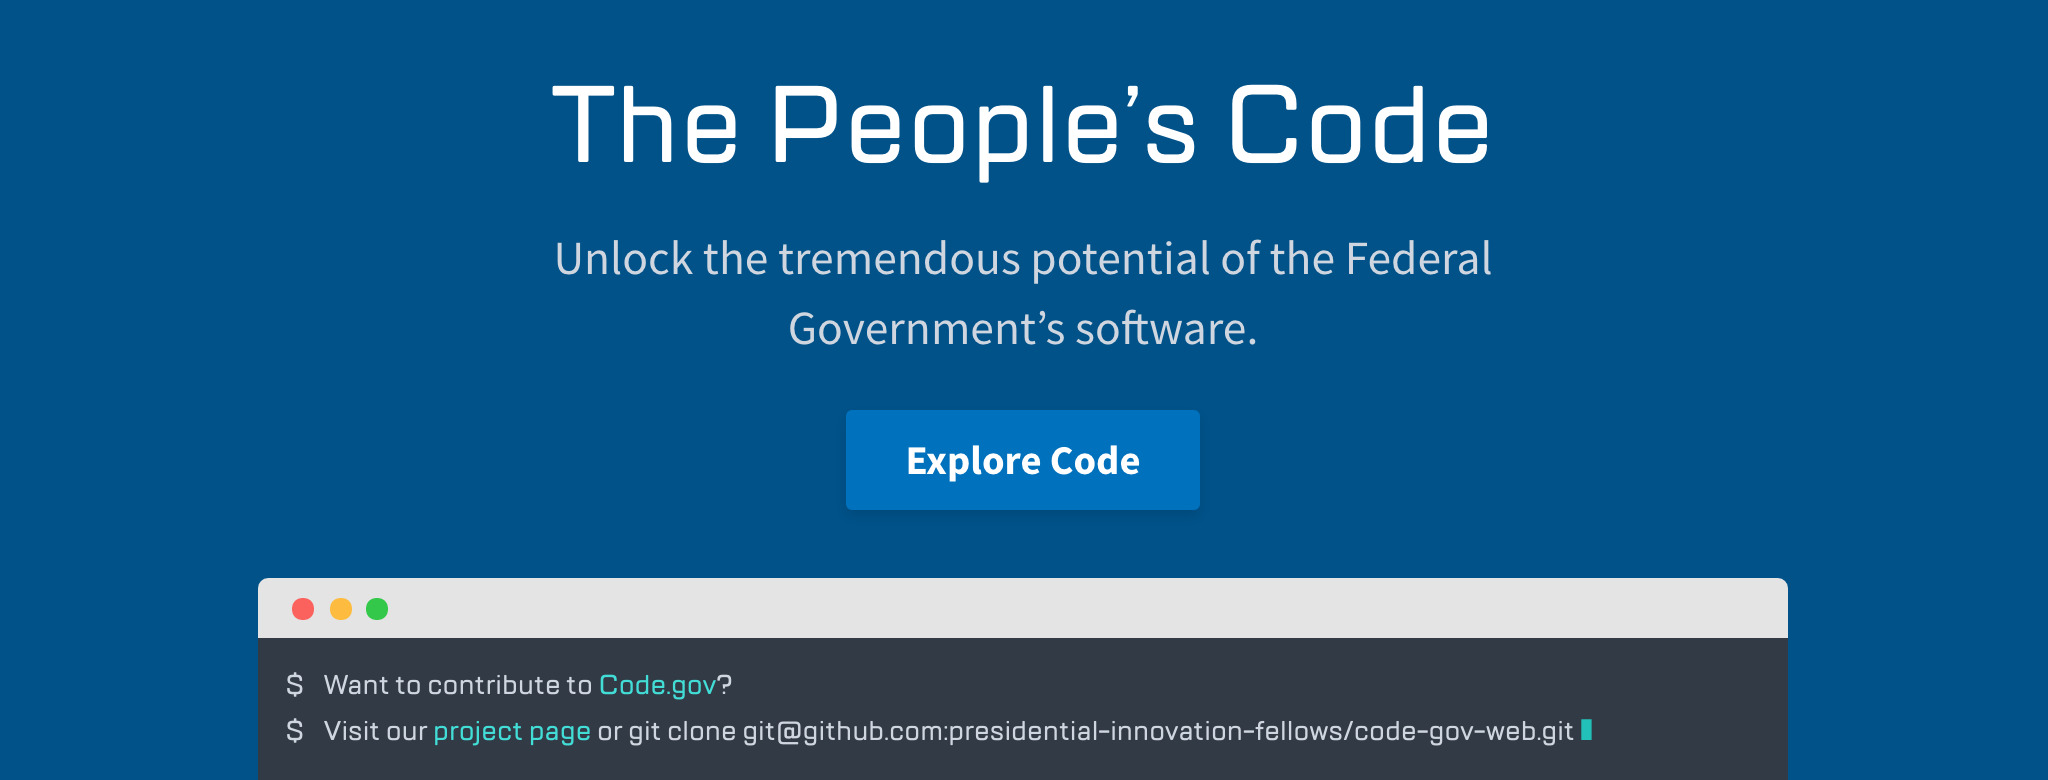 Открытый код. Government code. Code people. Explore the code. Код опен